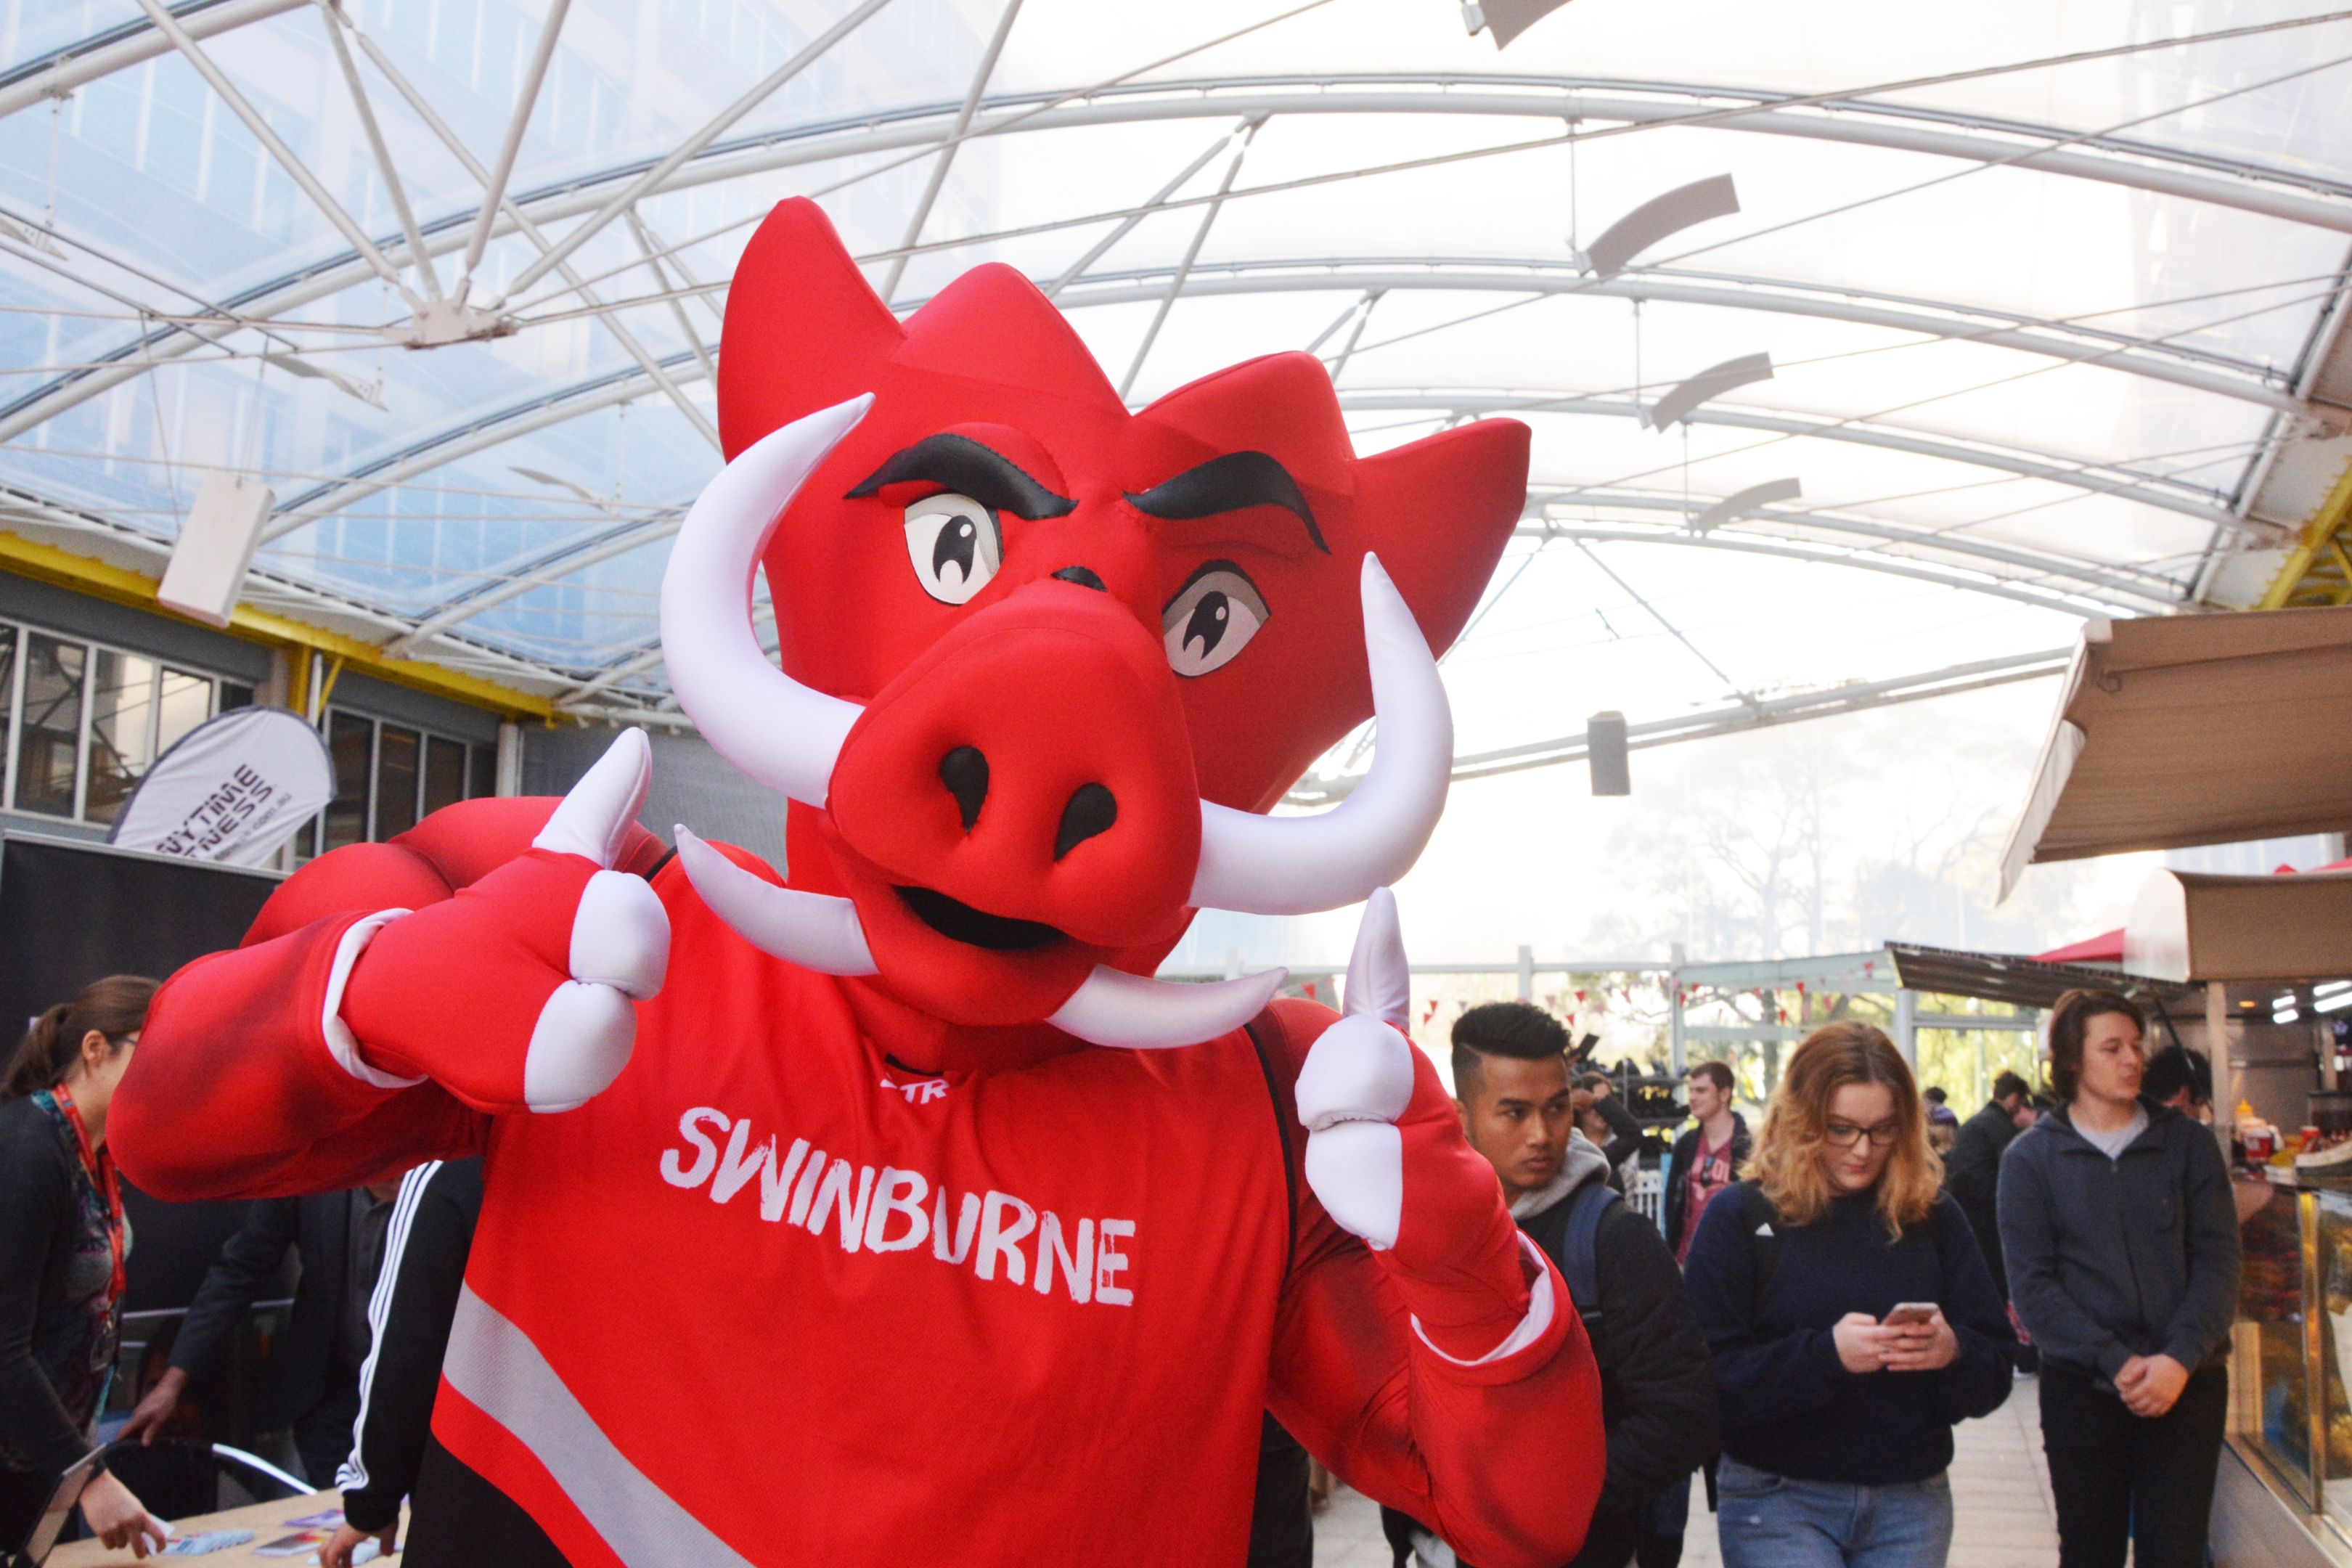 Swinburne's mascot, Razor the Razorback (a wild boar), giving the thumbs up.